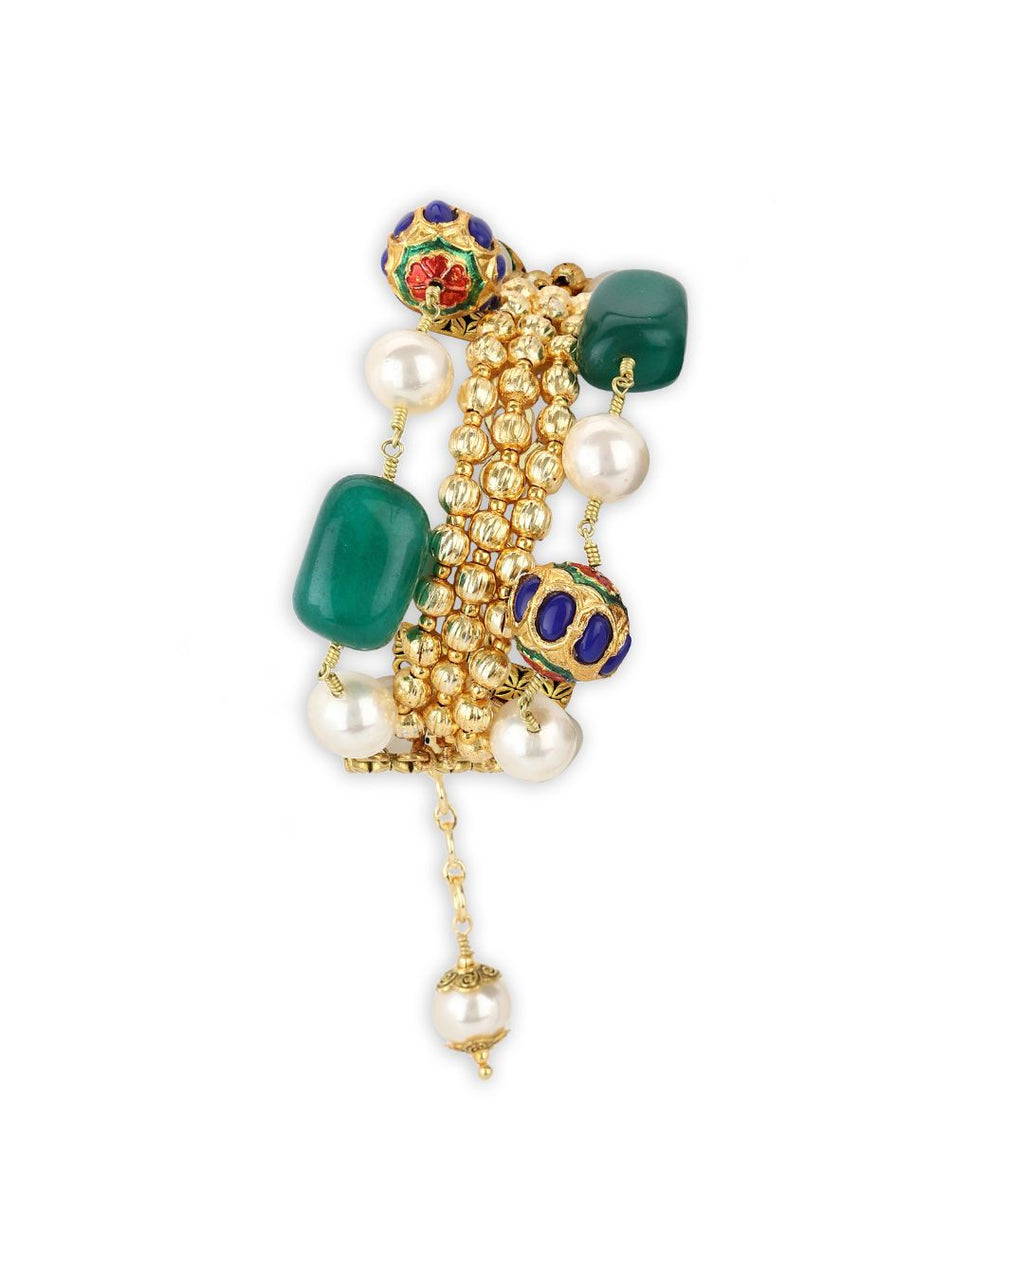 Lanthe Kairi Bracelet - Bracelets & Cuffs - Handcrafted Jewellery - Made in India - Dubai Jewellery, Fashion & Lifestyle - Dori